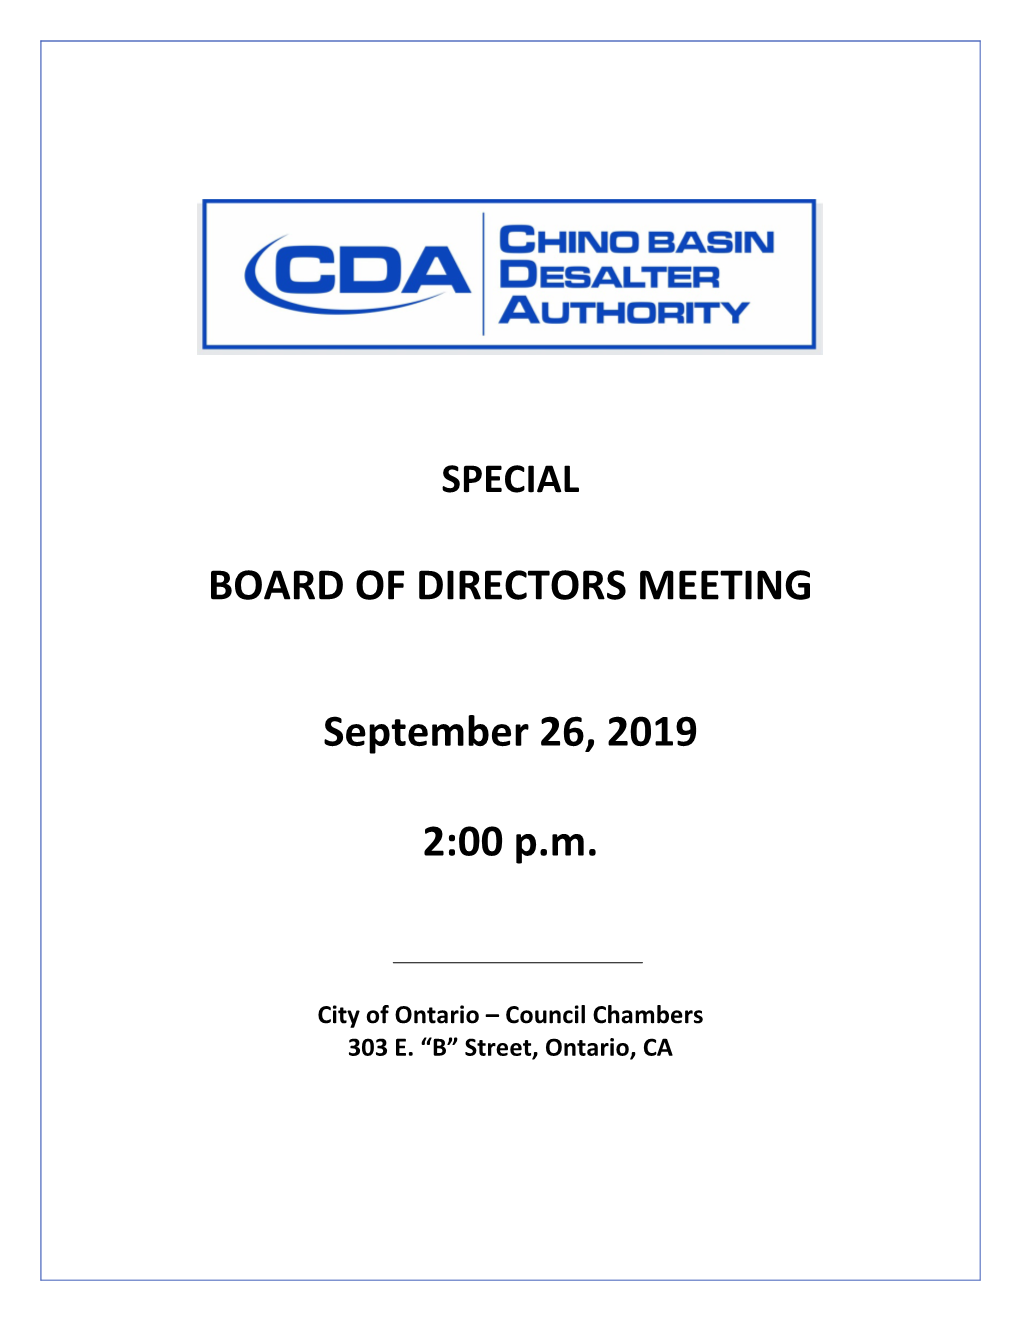 BOARD of DIRECTORS MEETING September 26, 2019 2:00 P.M